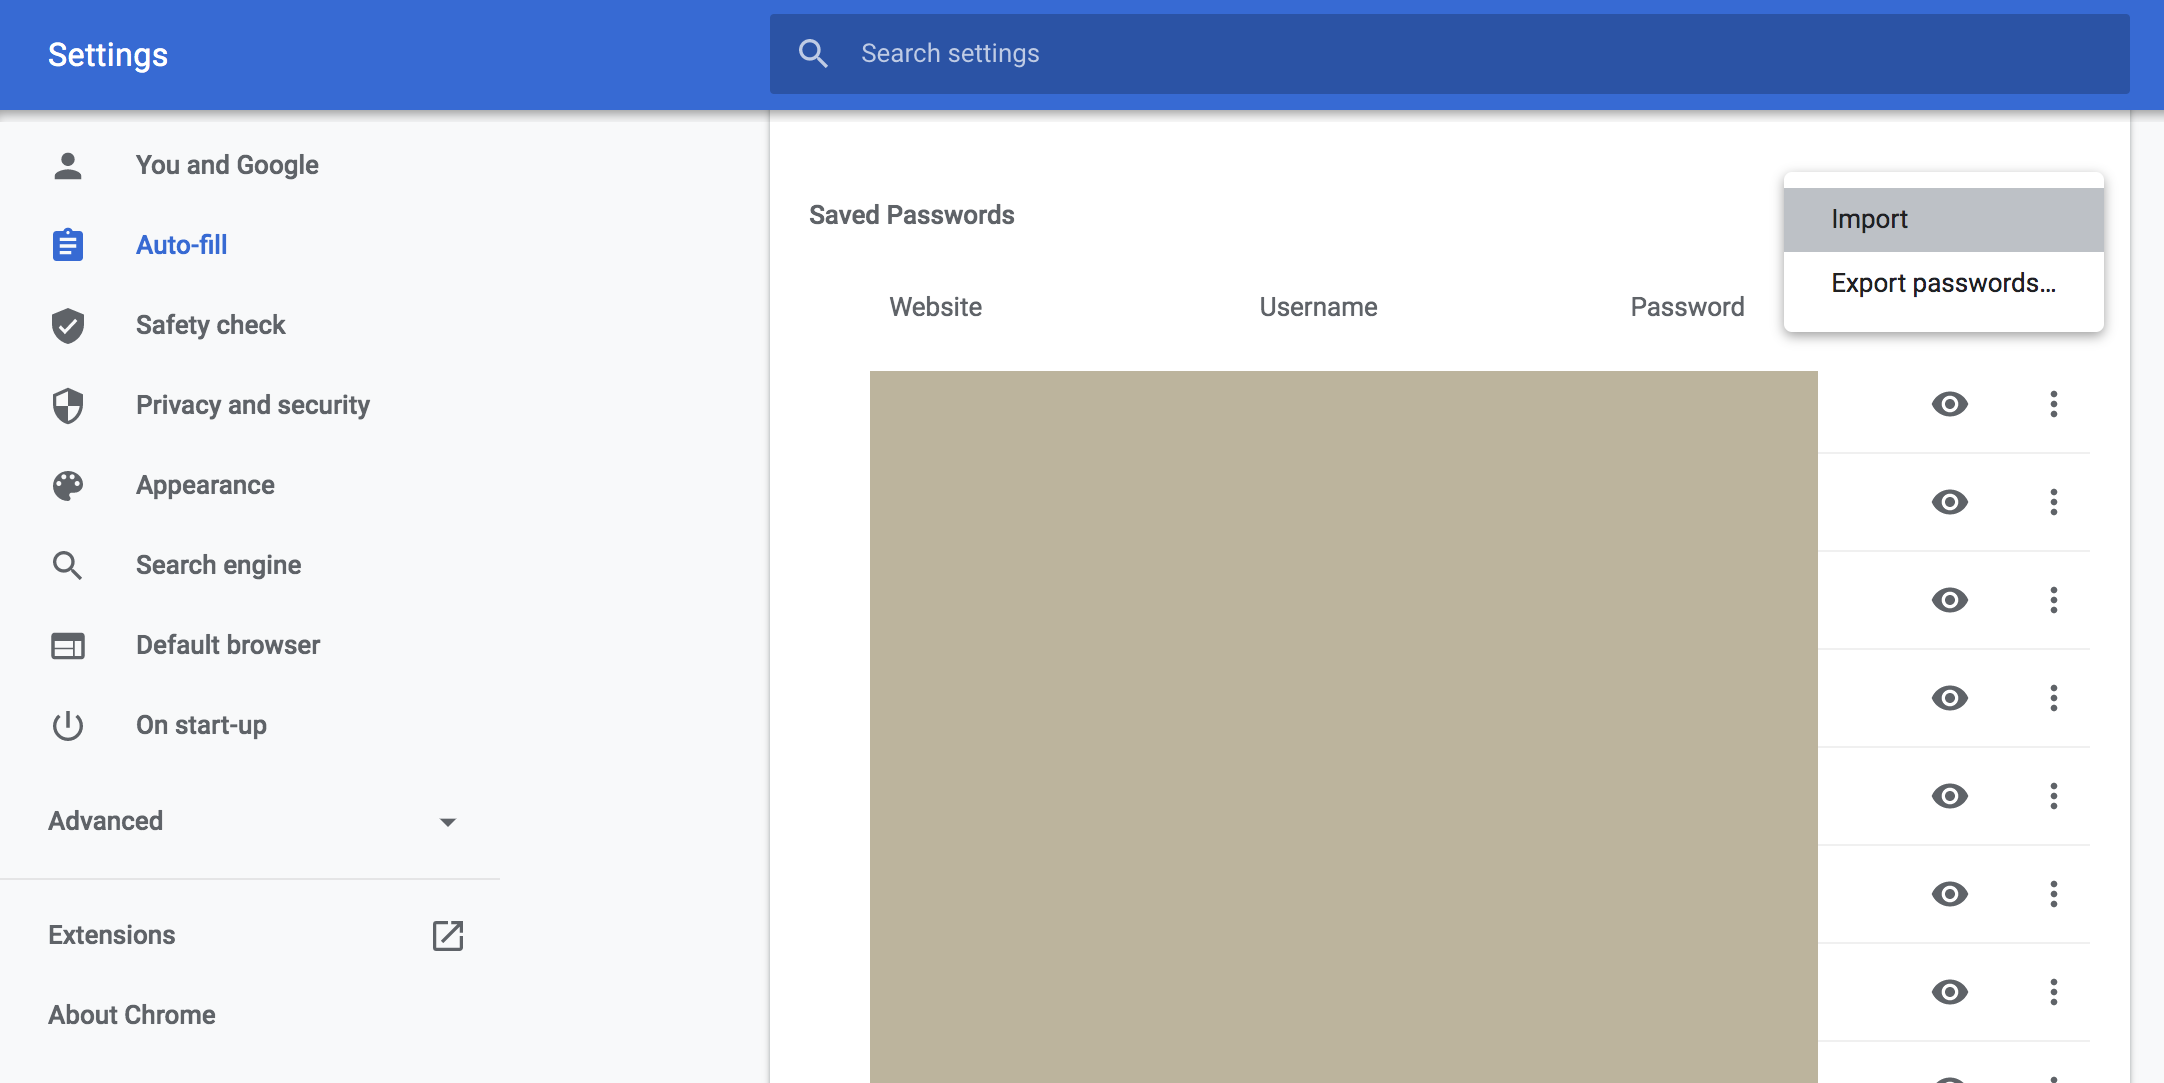 Import passwords in Chrome